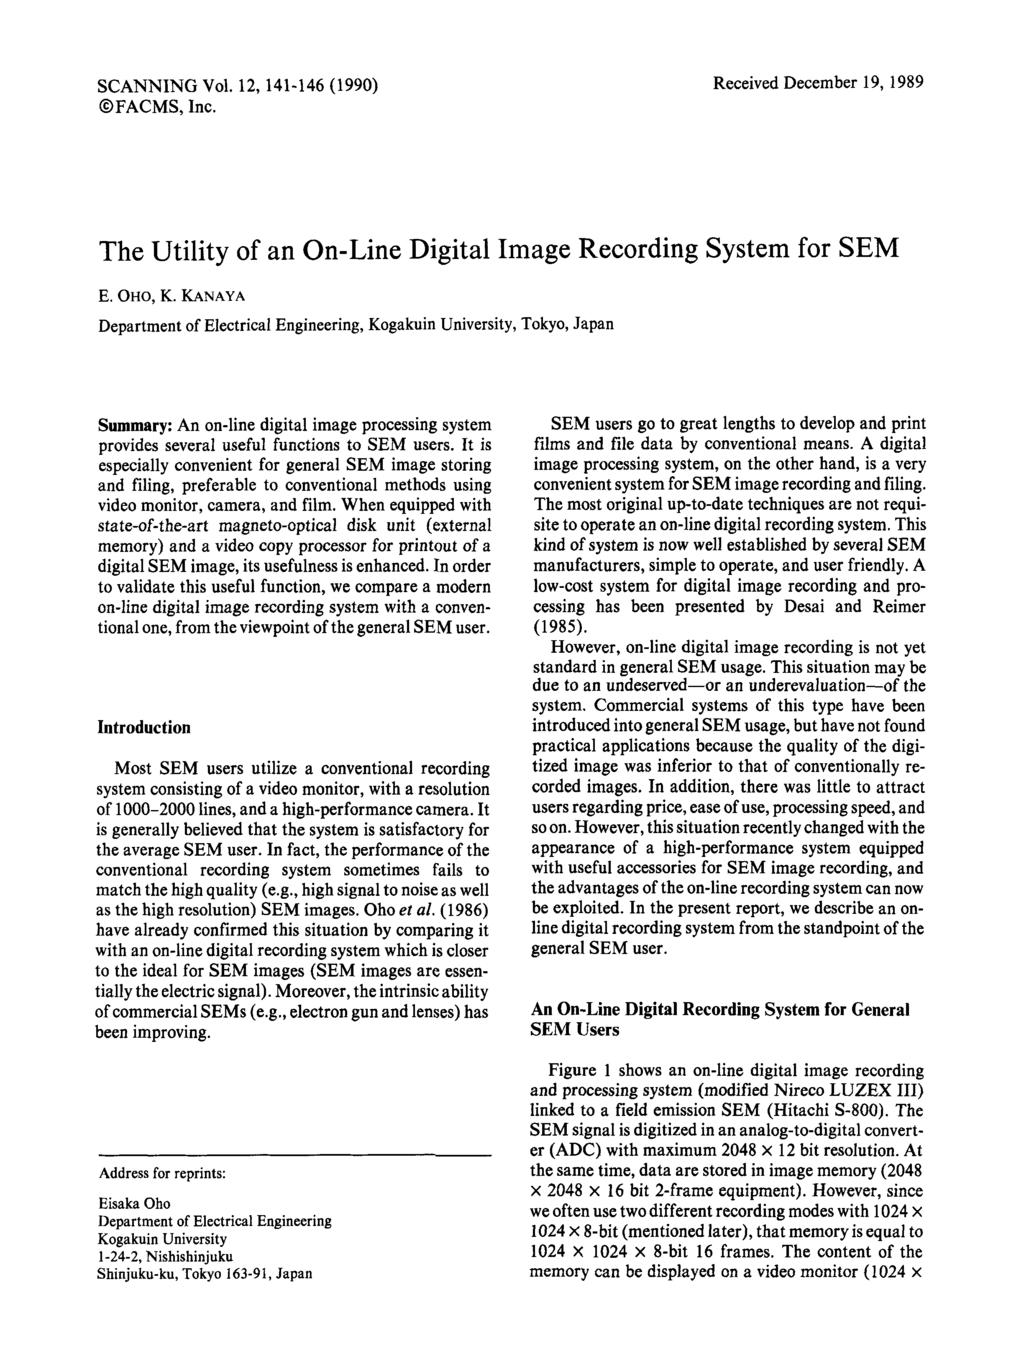 SCANNING Vol. 12,141-146 (1990) OFACMS, Inc. Received December 19, 1989 The Utility of an On-Line Digital Image Recording System for SEM E. OHO, K.